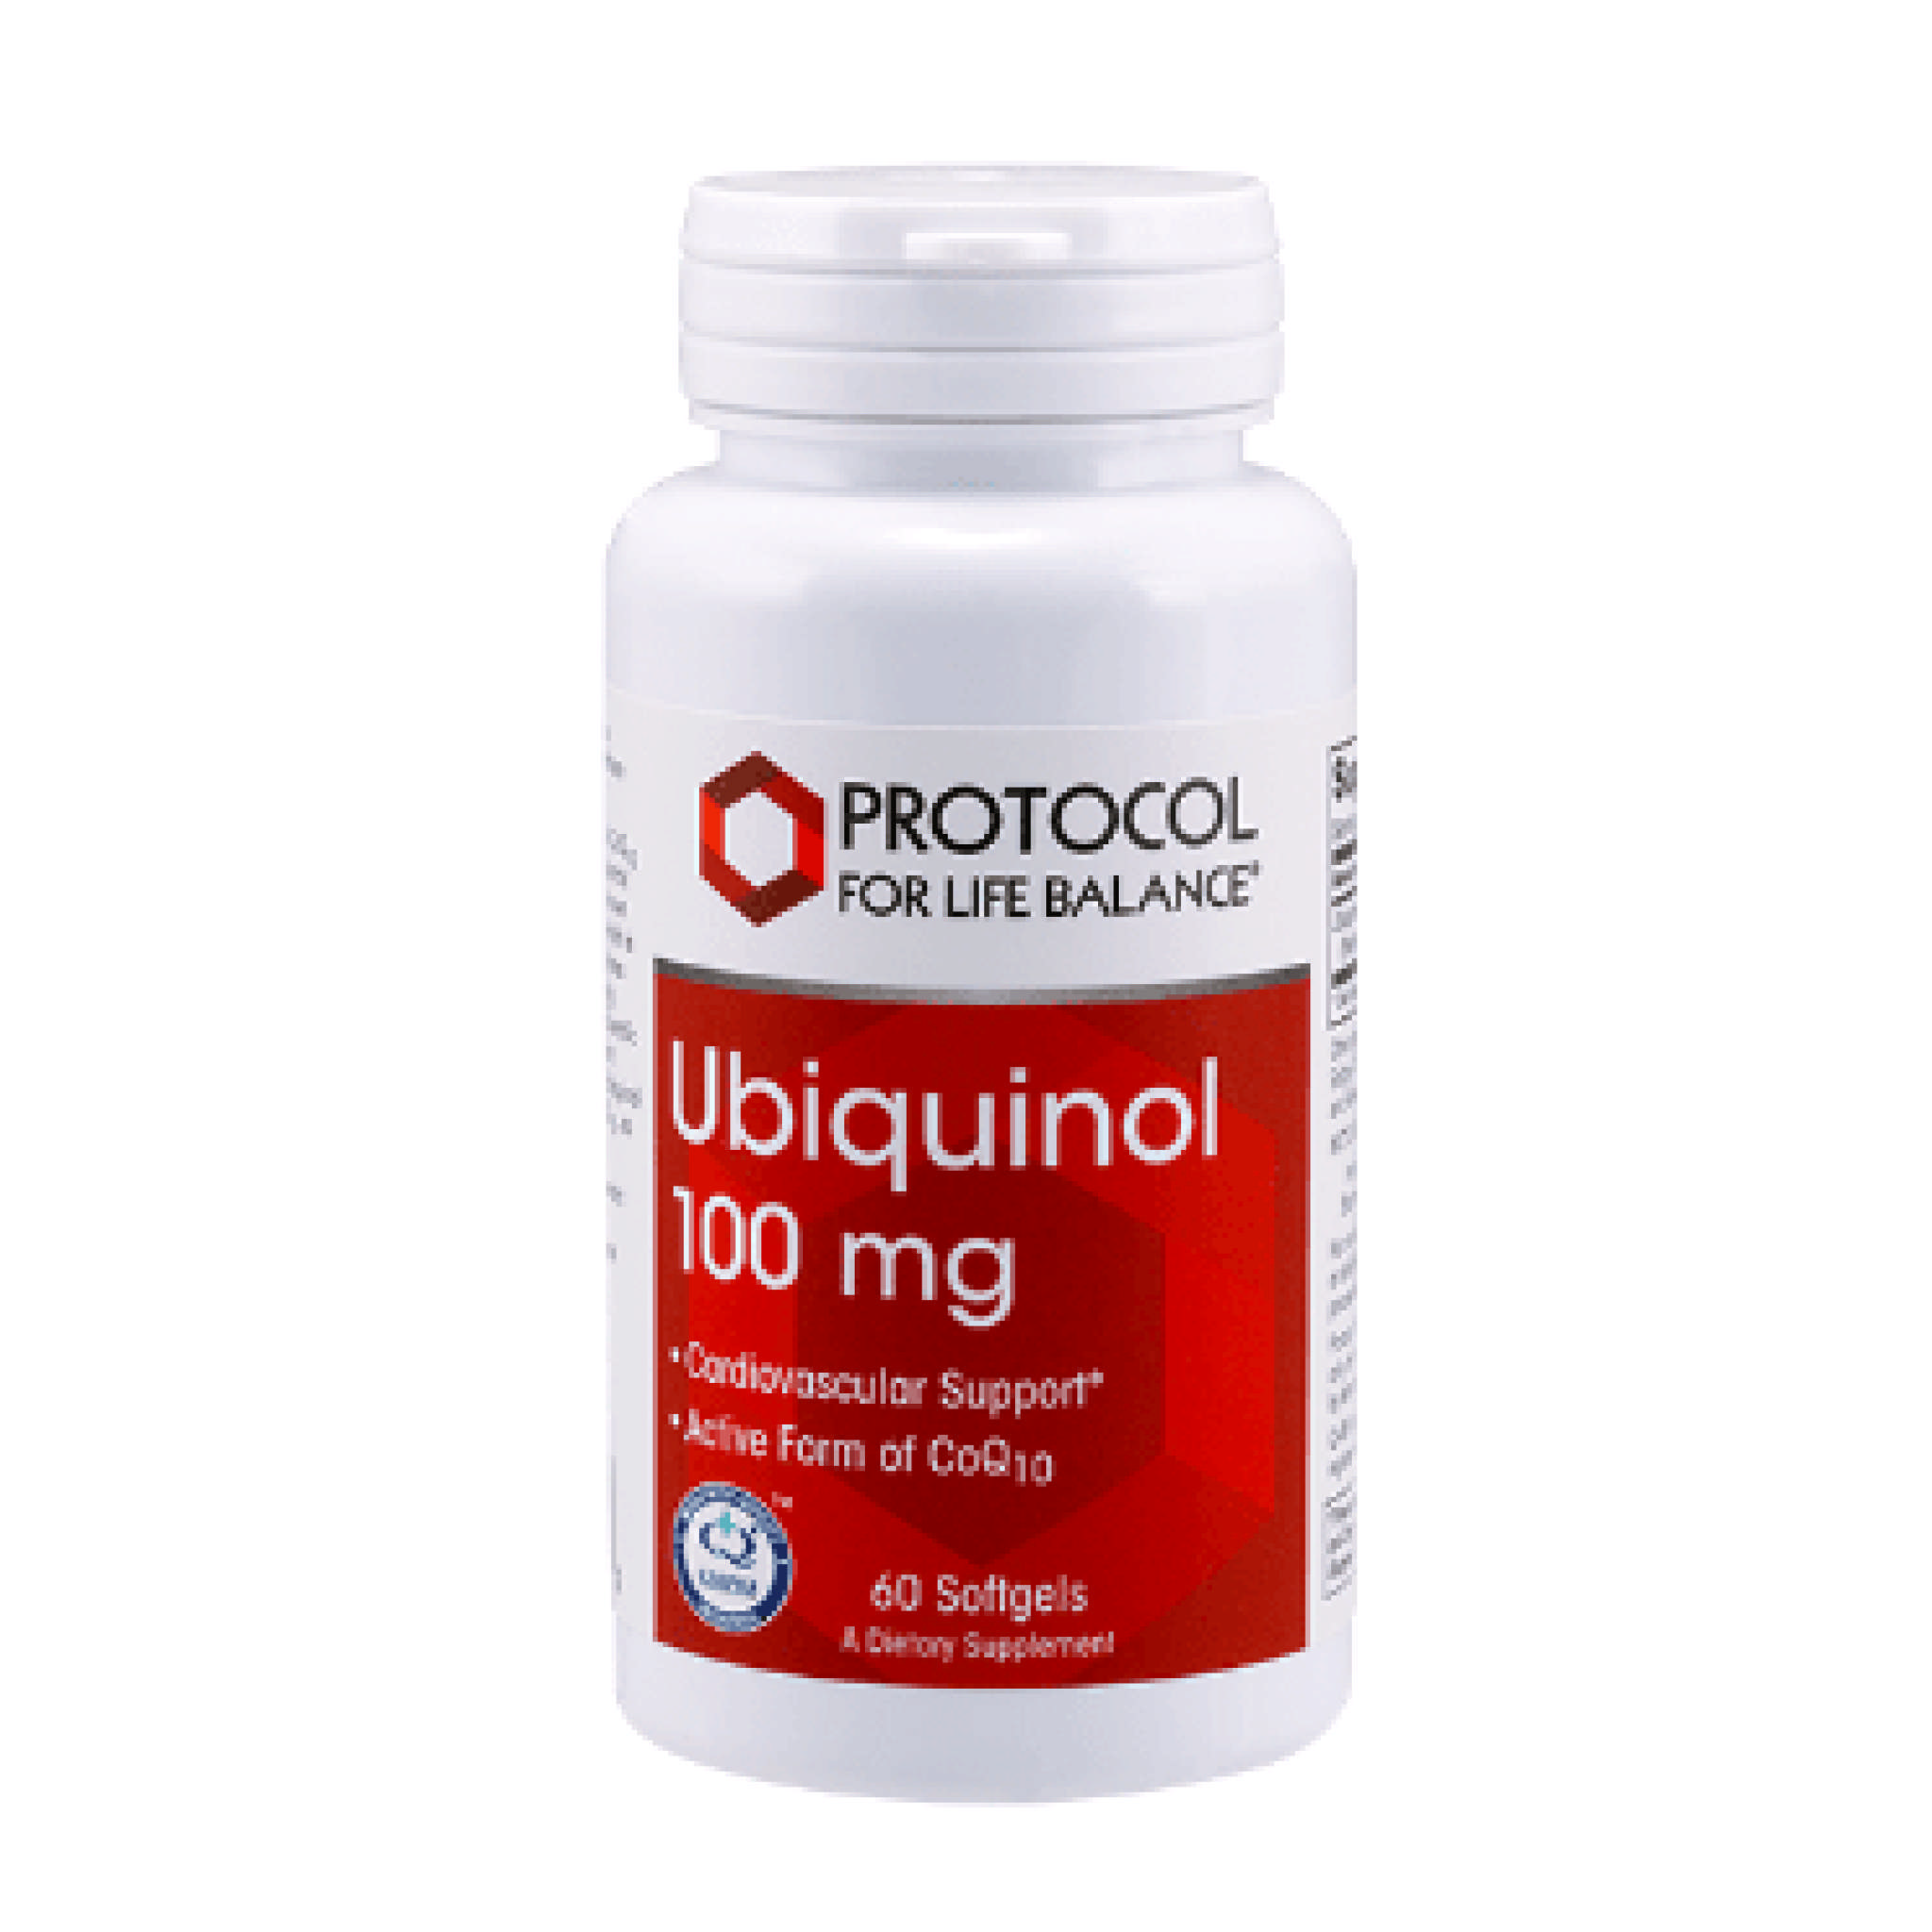 Protocol For Life Balance - Ubiquinol 100 mg